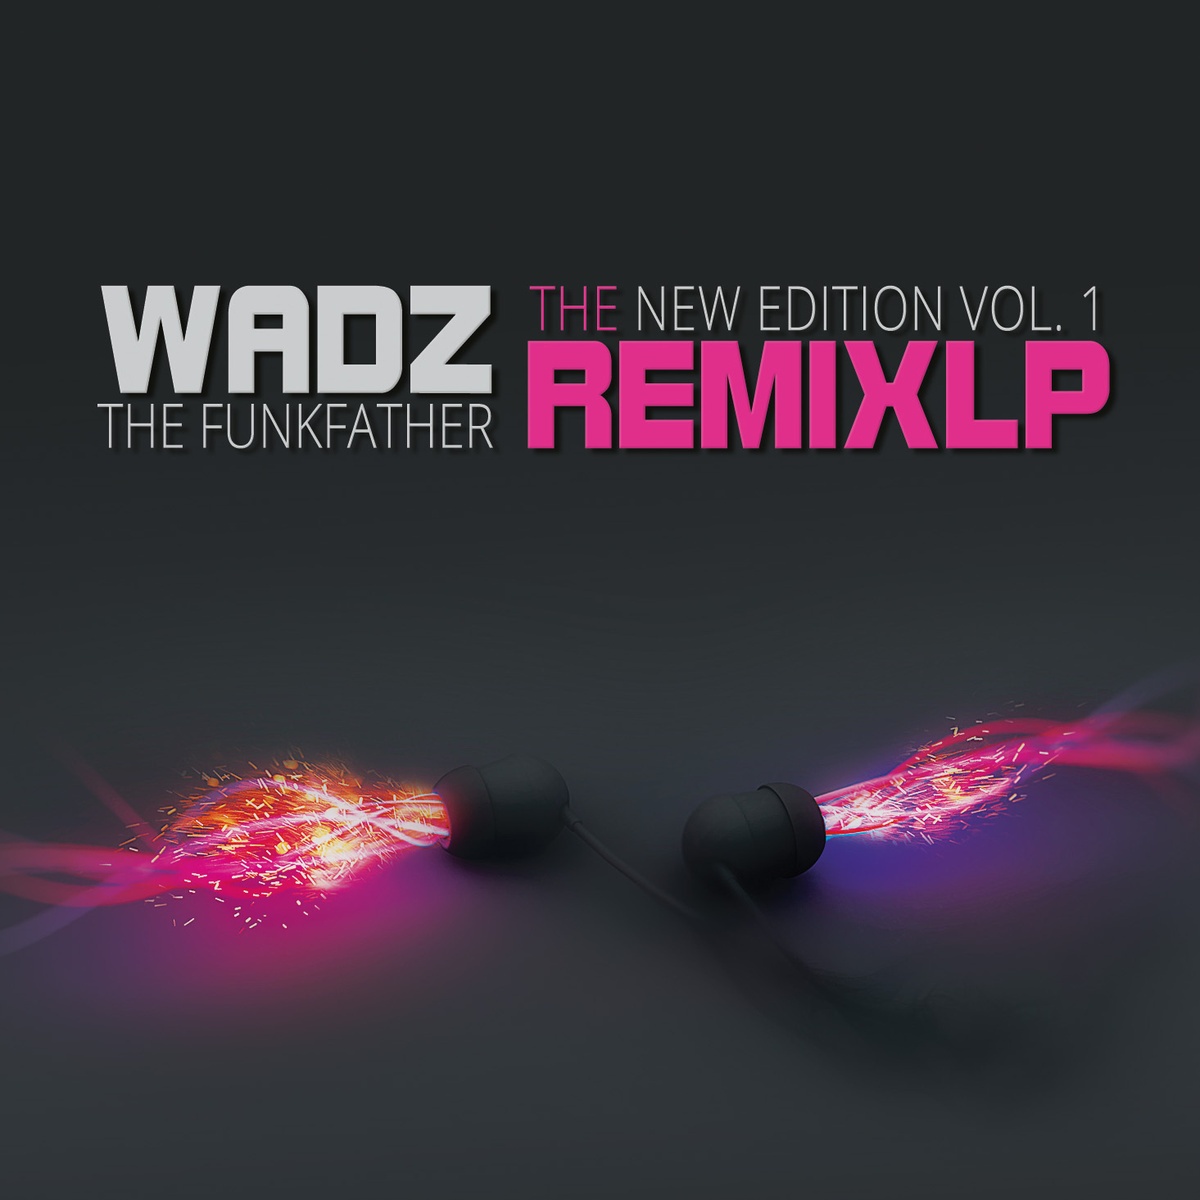 The Remix LP New Edition Vol. 1